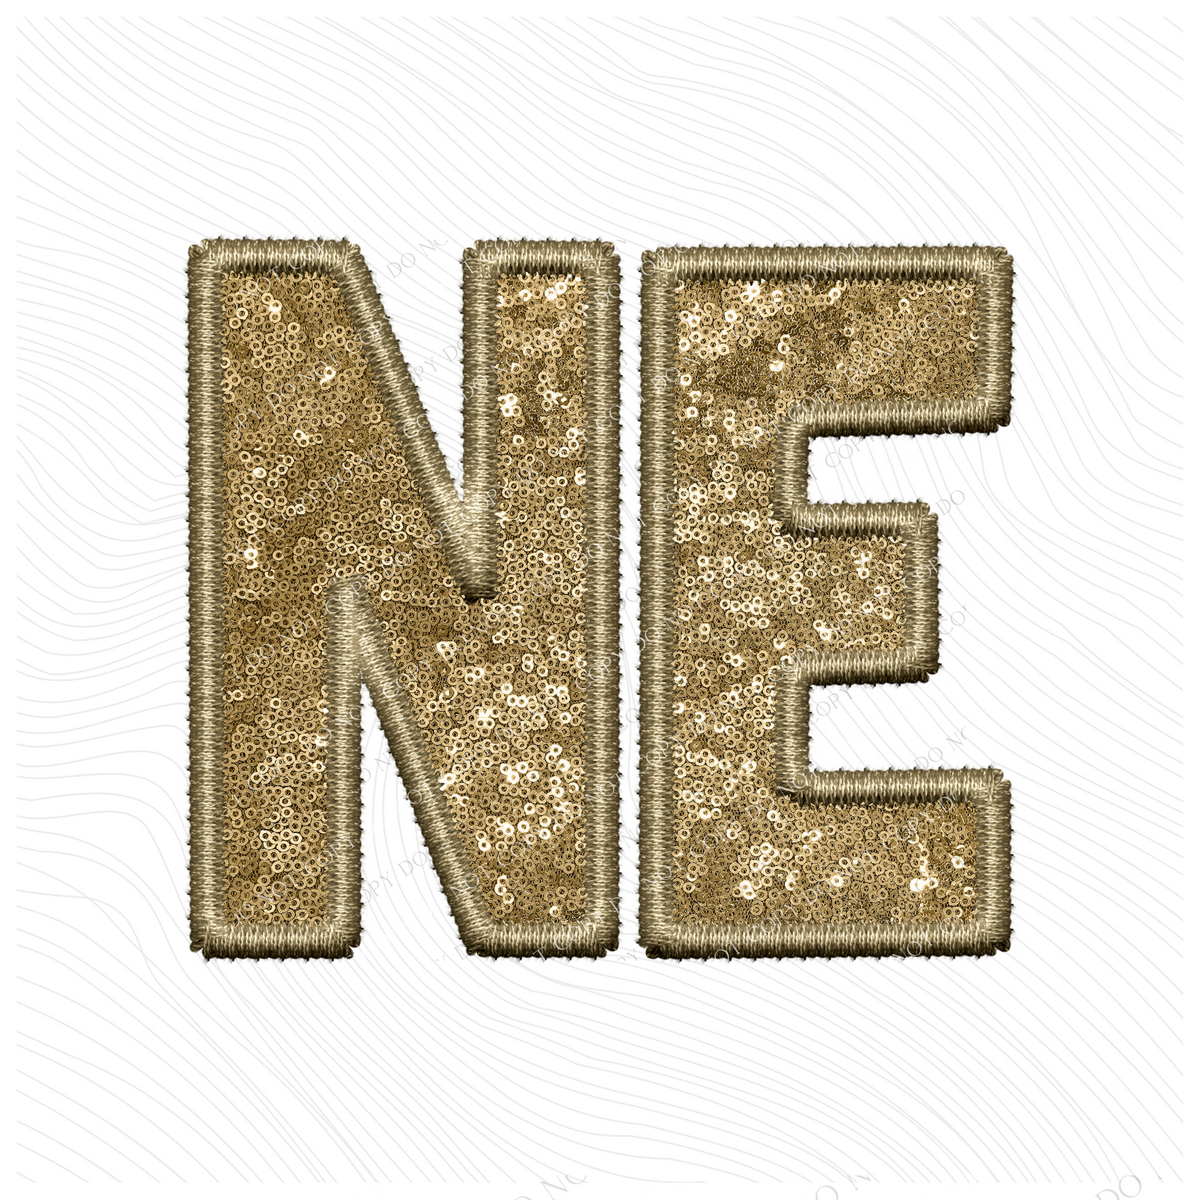 NE Nebraska Embroidery Sequin Digital Design in Gold, PNG